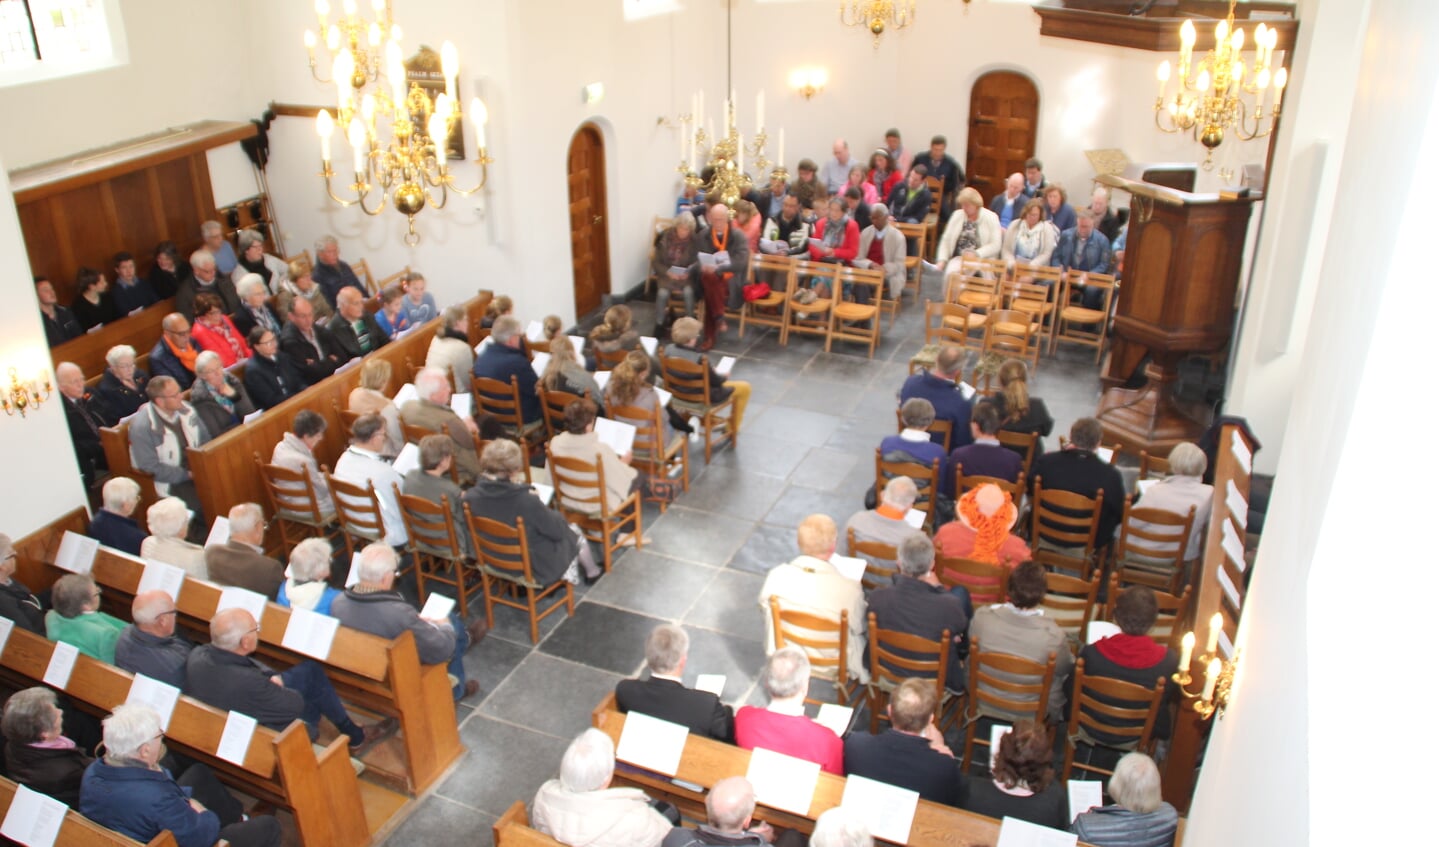 Het Koningsdagconcert (op donderdag 27 april) leverde een goed gevulde Stulpkerk op. [HvdB]